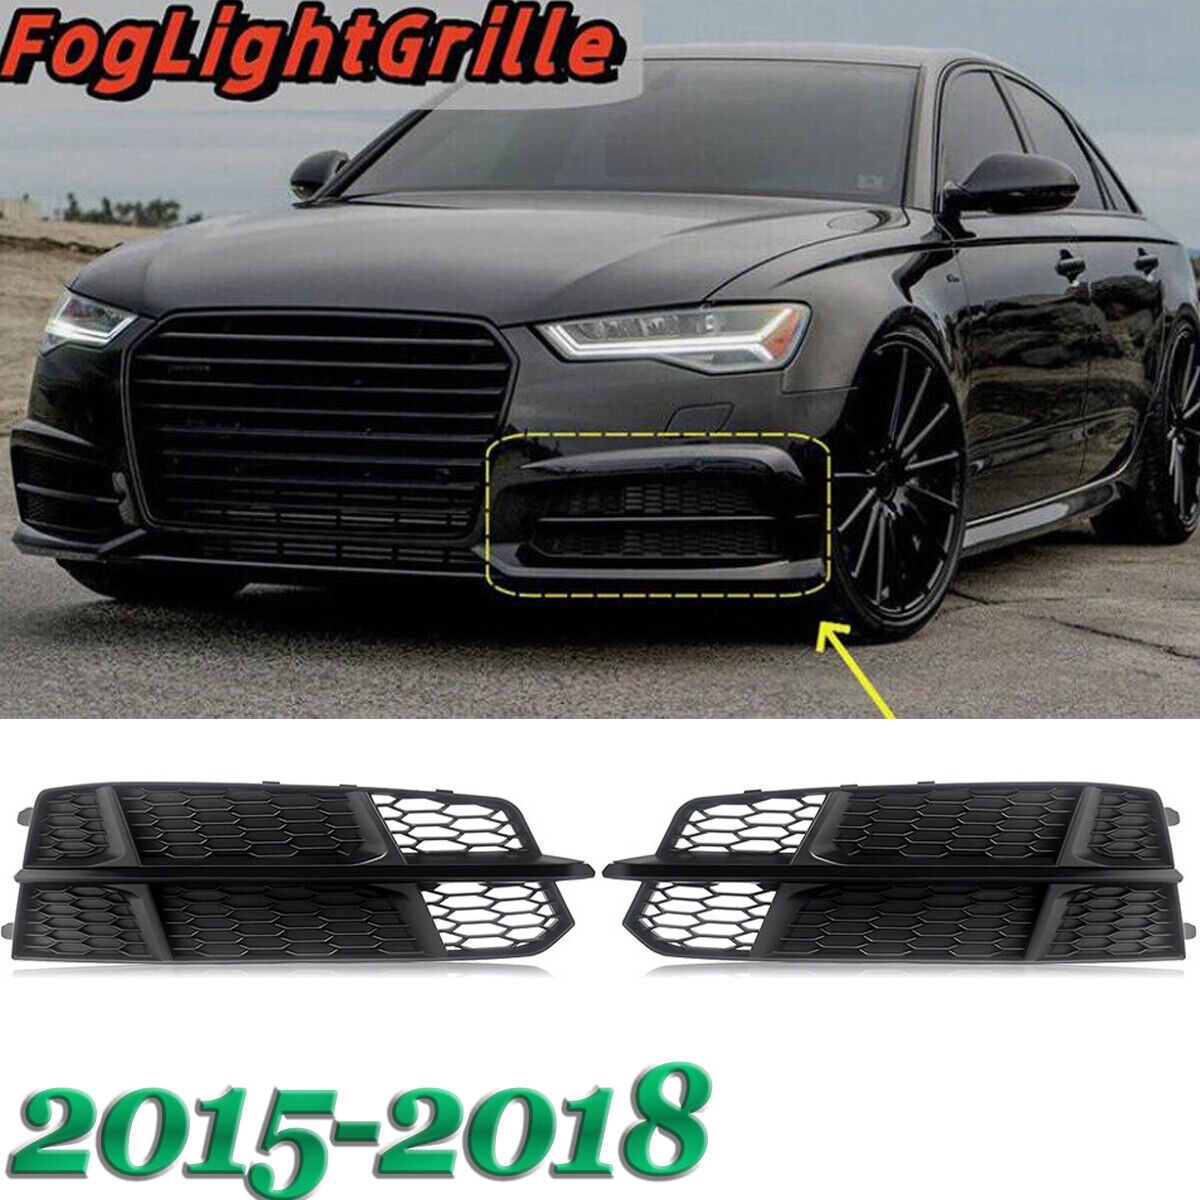 Black Honeycomb Look Front Fog Light Grille For Audi S6 A6 S-Line 2015-2018 L+R